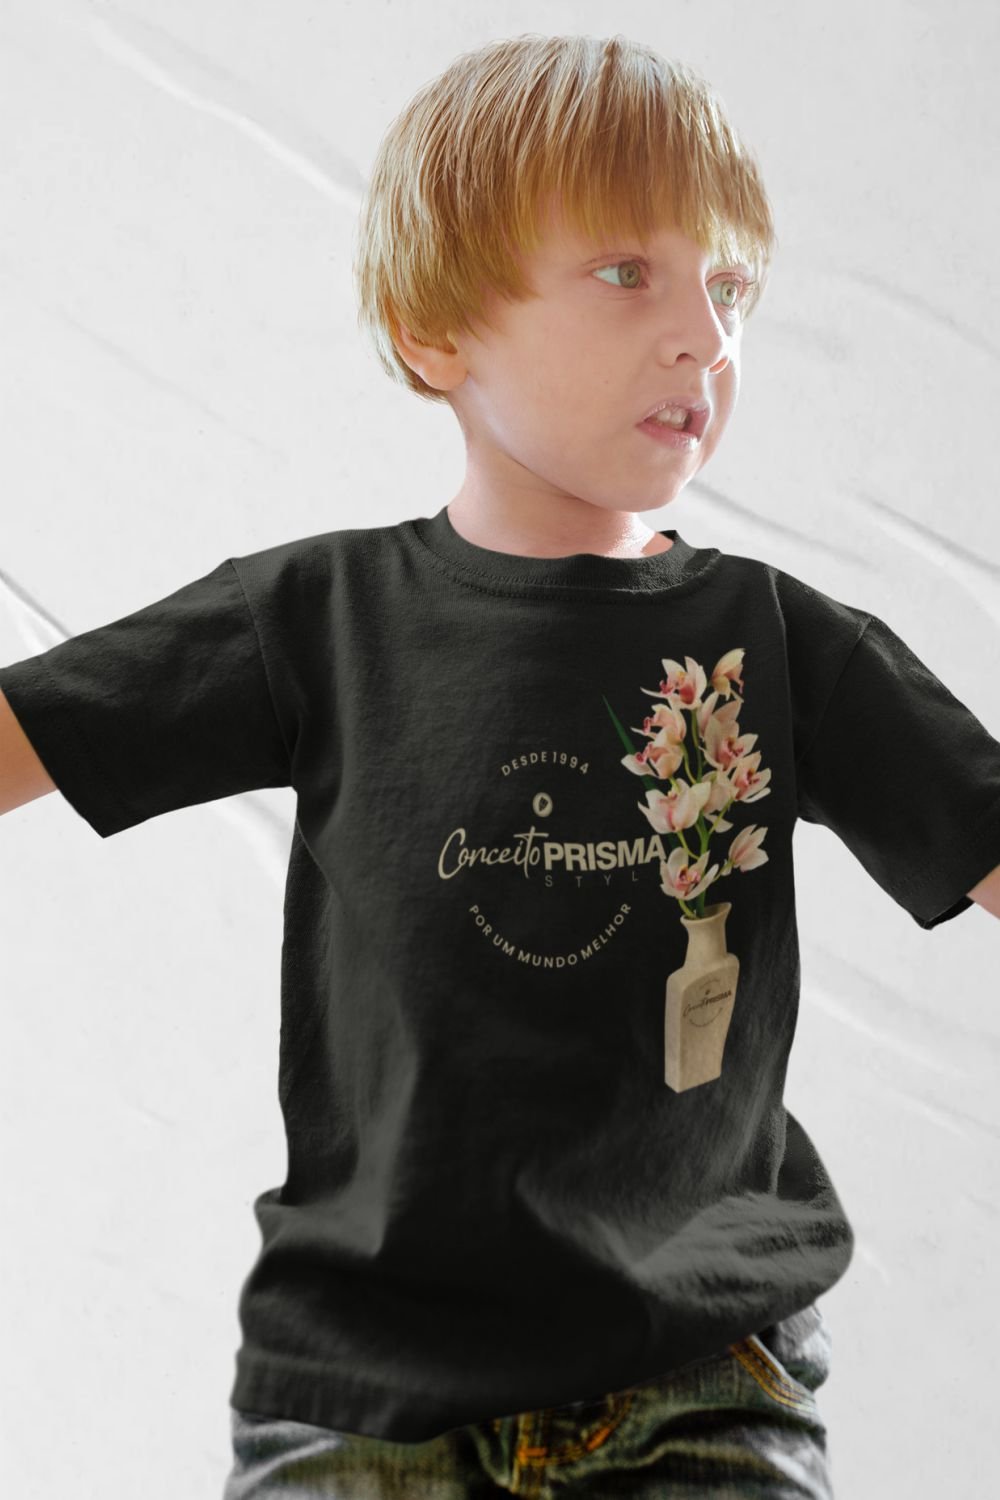 camiseta infantil conceito prisma jug preta